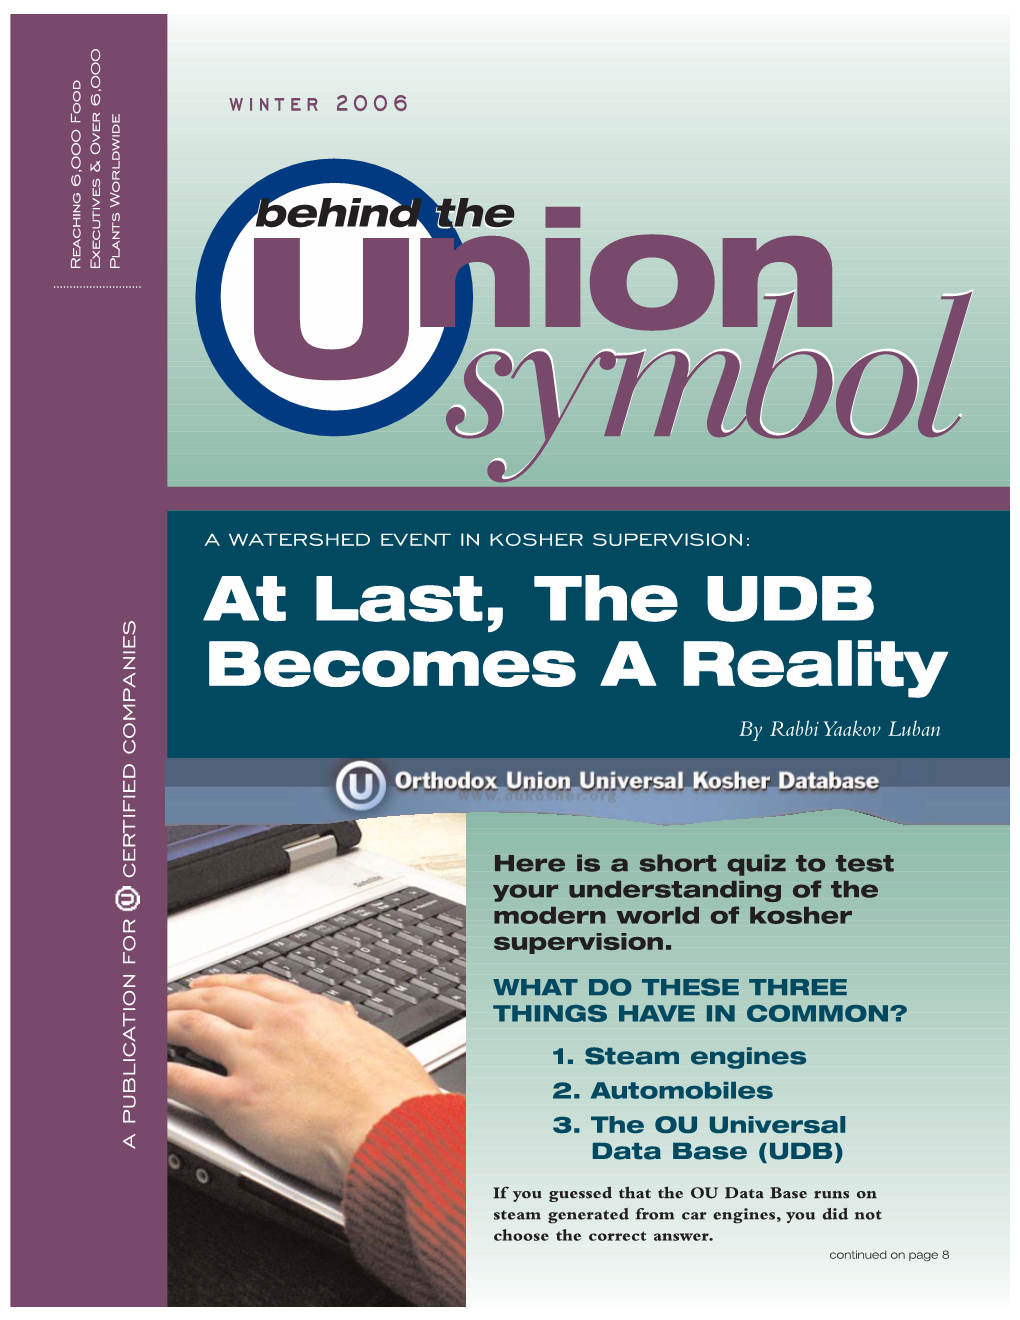 At Last, the UDB Becomes a Reality by Rabbi Yaakov Luban